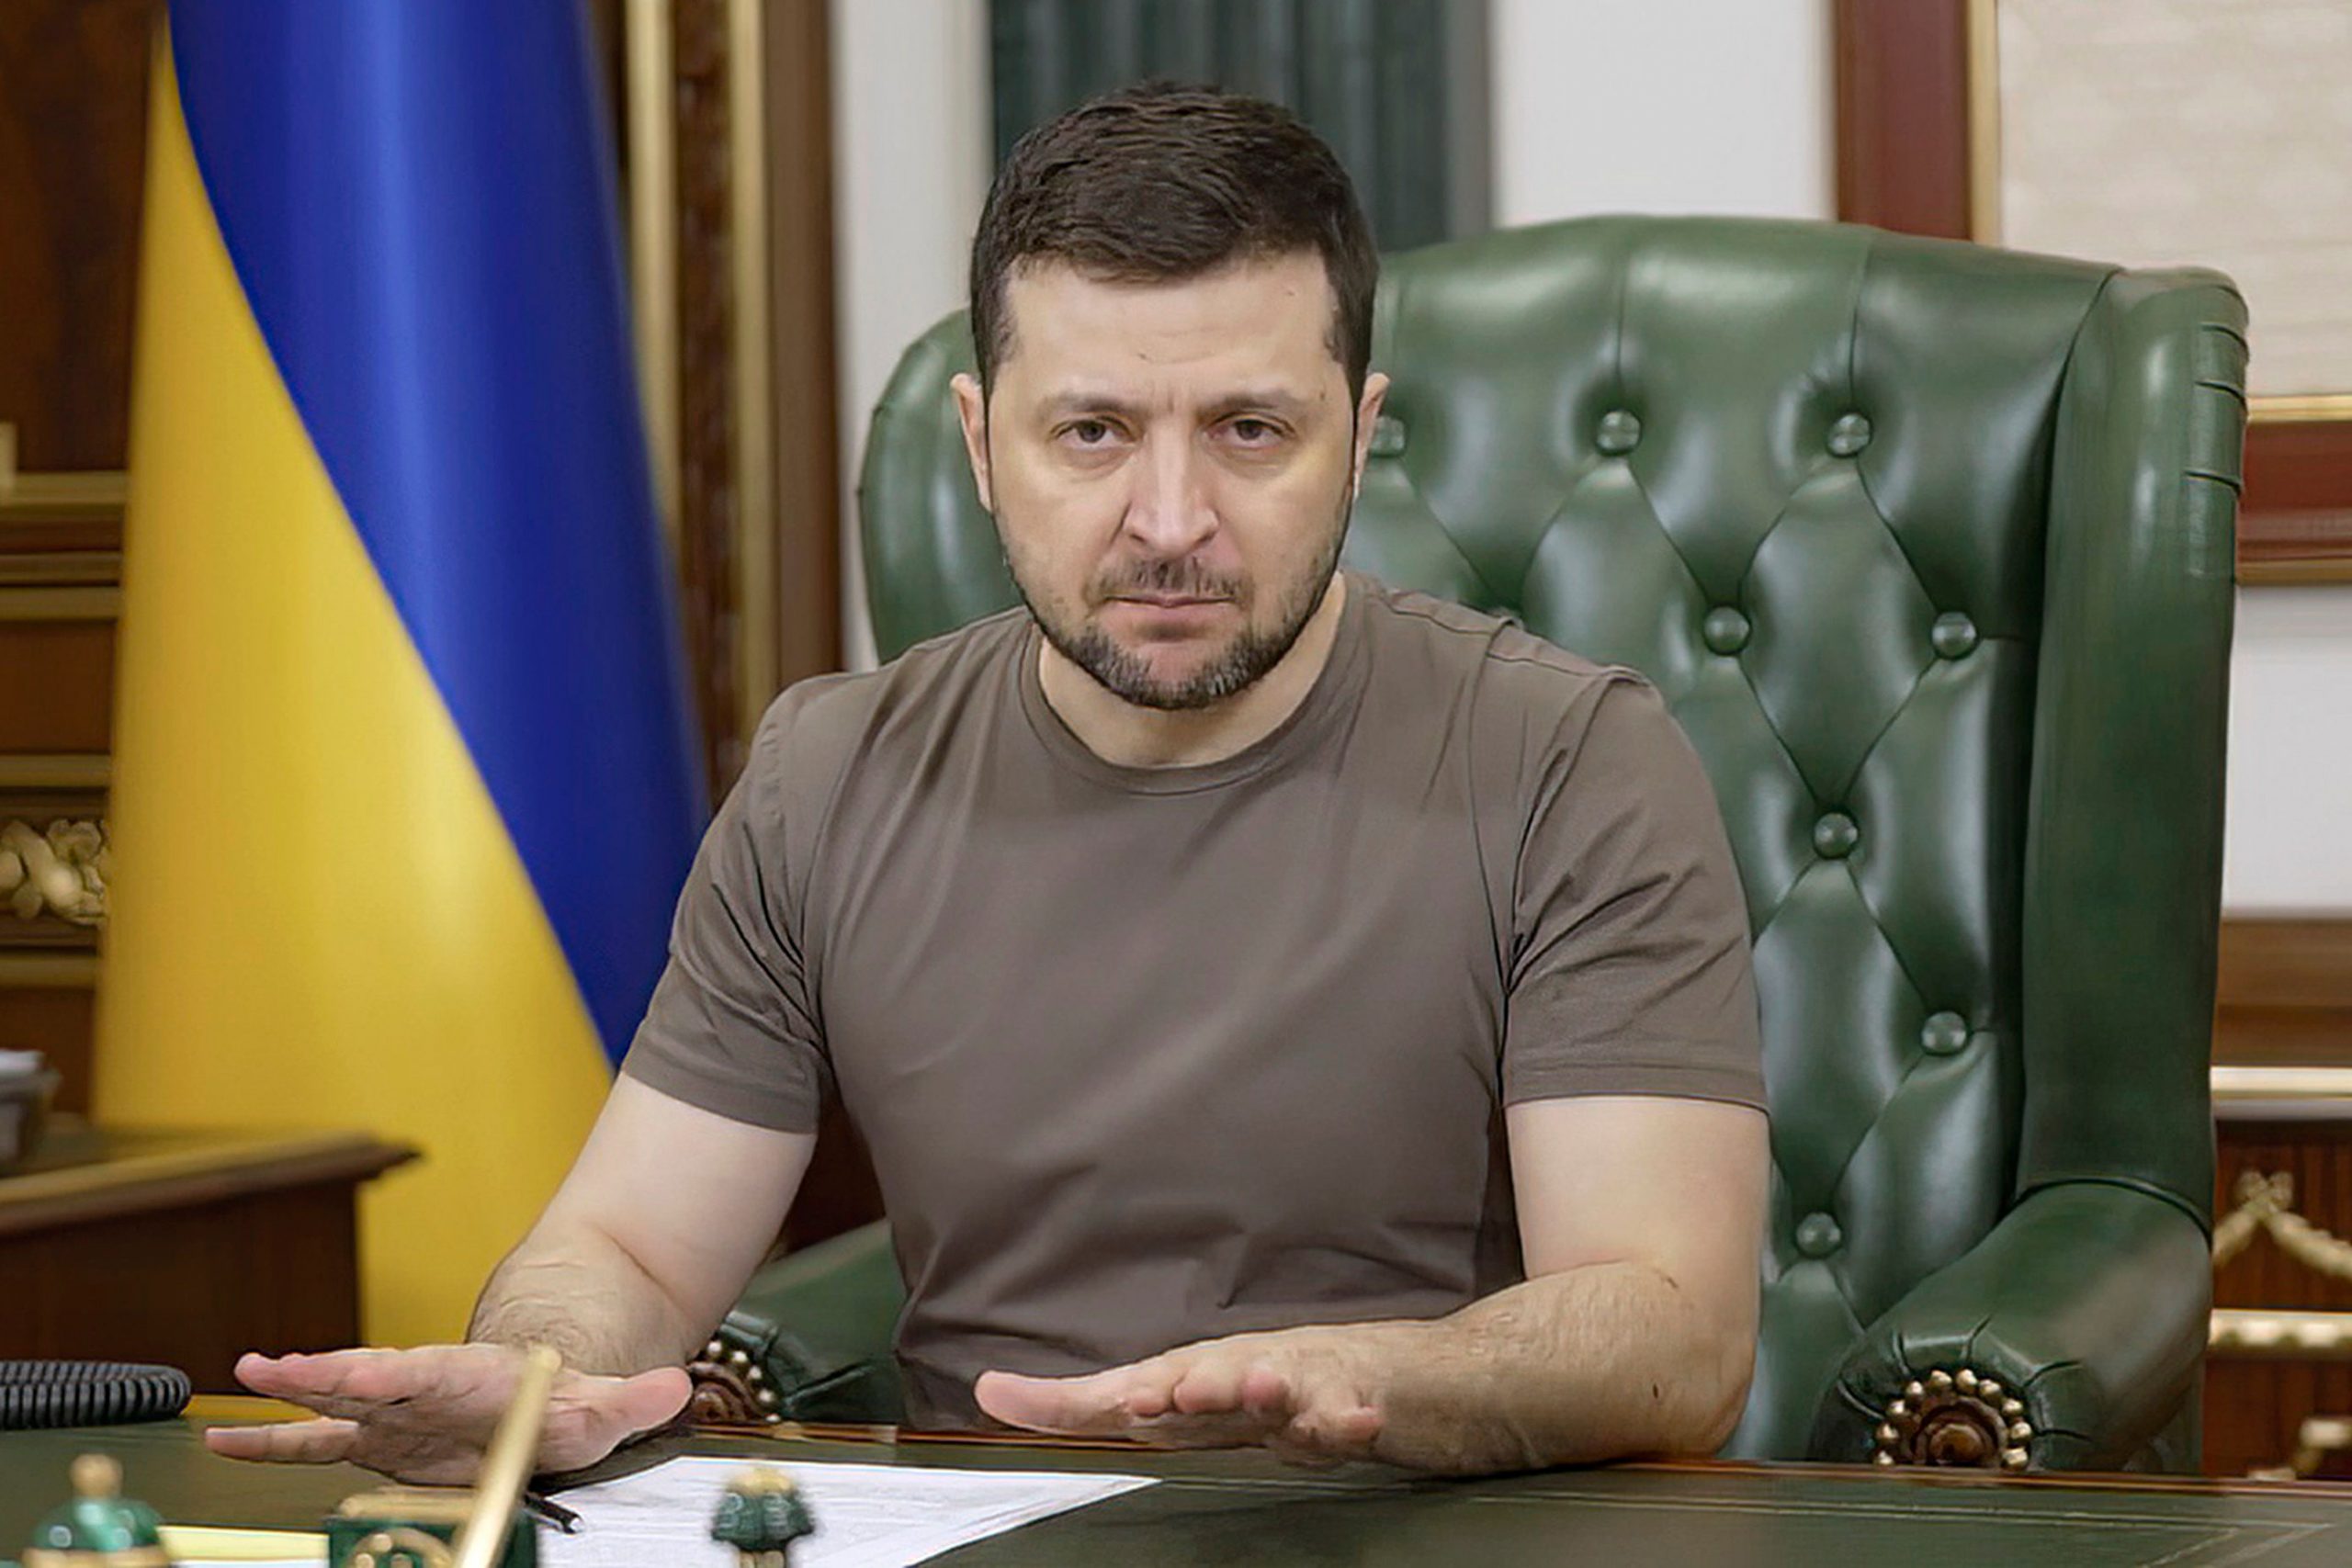 Ukraine President Volodymyr Zelensky sacks two generals, calls them ‘traitors’